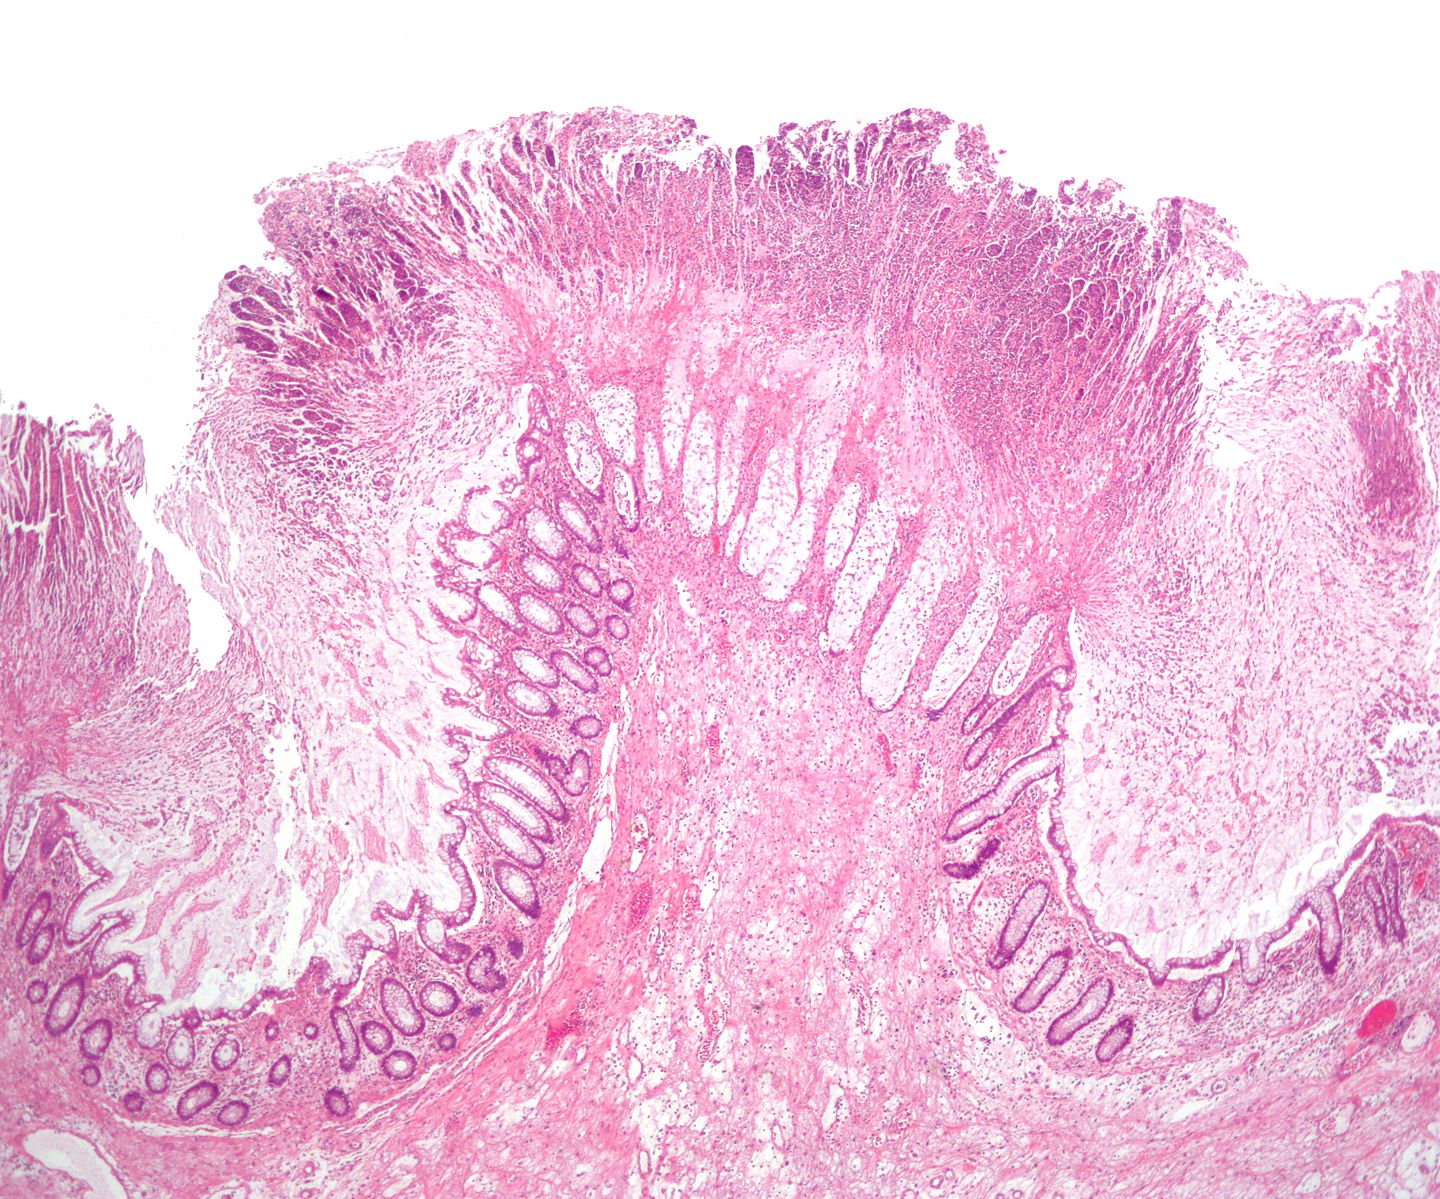 Pseudomembranous colitis. H& E staining showing pseudomembranes in Clostridium colitis [47]